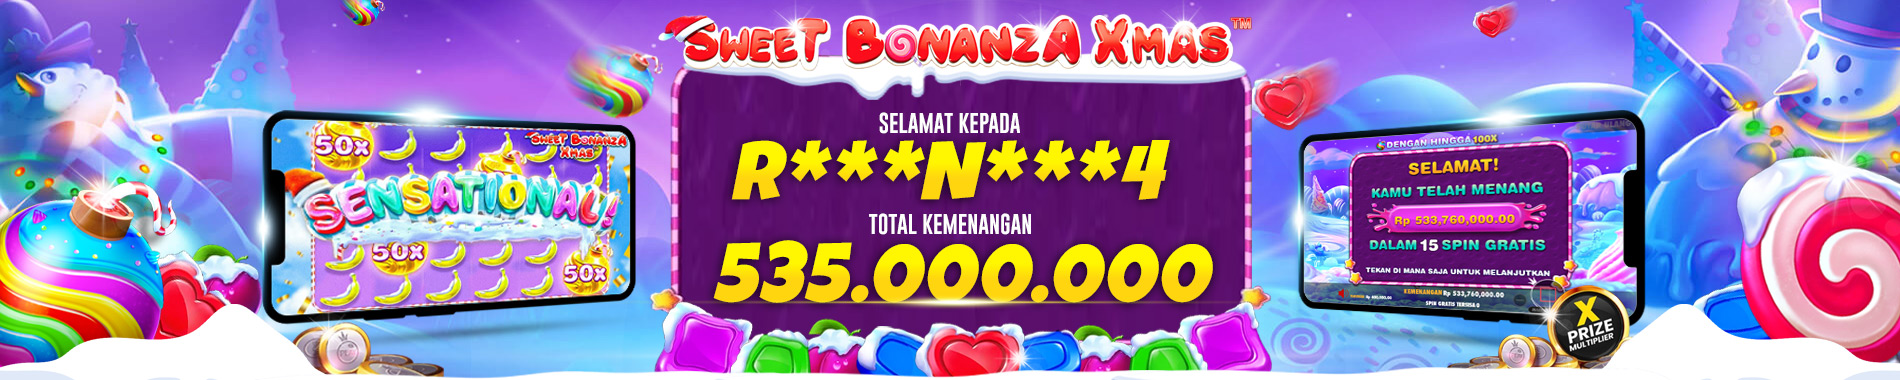 Slot bonanca maxwin di indonesia